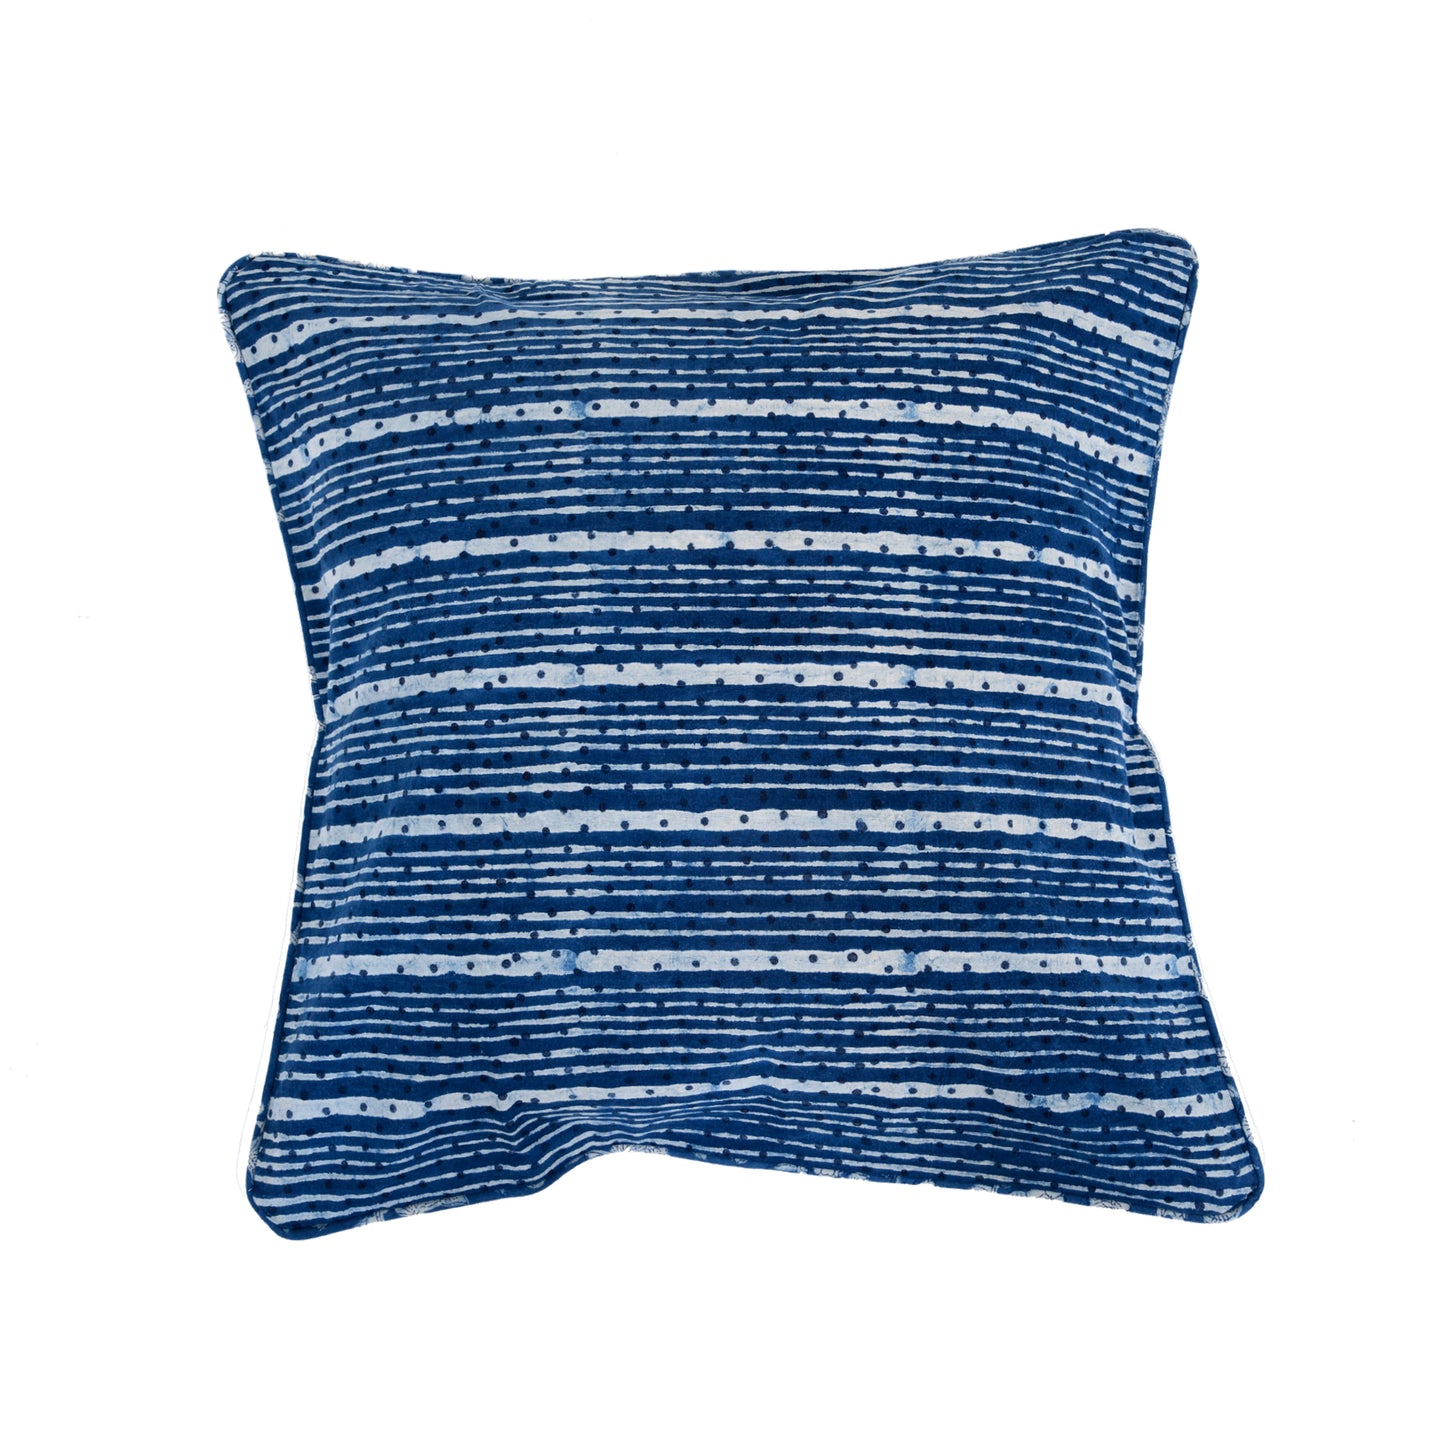 Indigo Dots and Stripes  Euro Cushion Cover